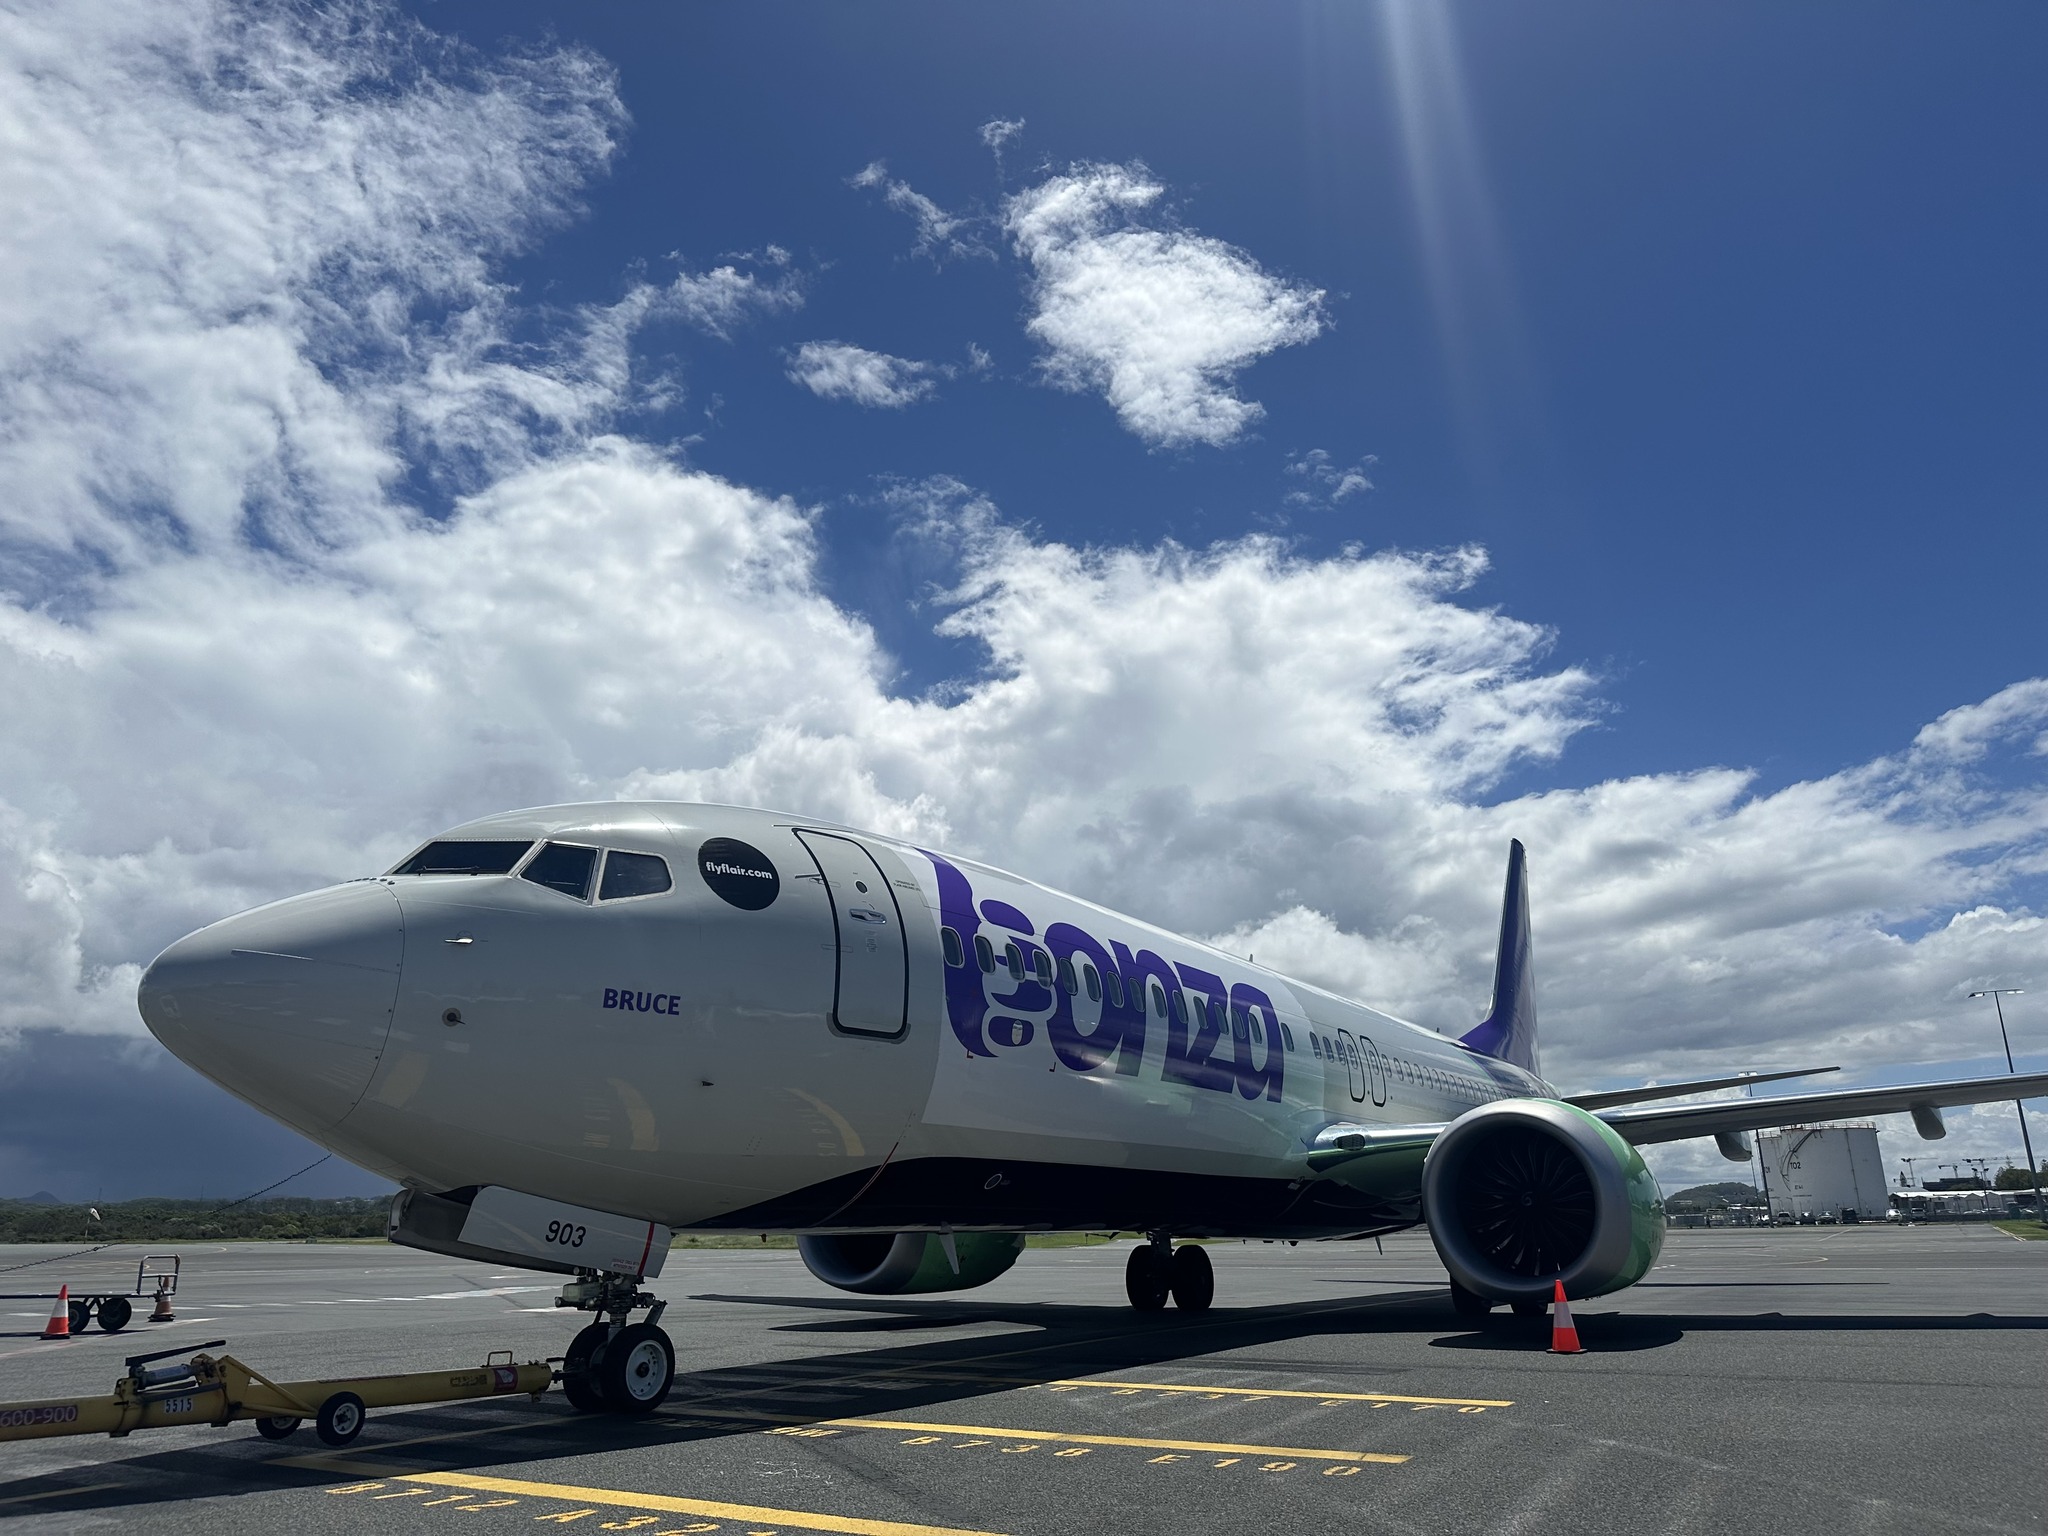 Travellers stranded after troubled Australian budget carrier Bonza grounds flights 